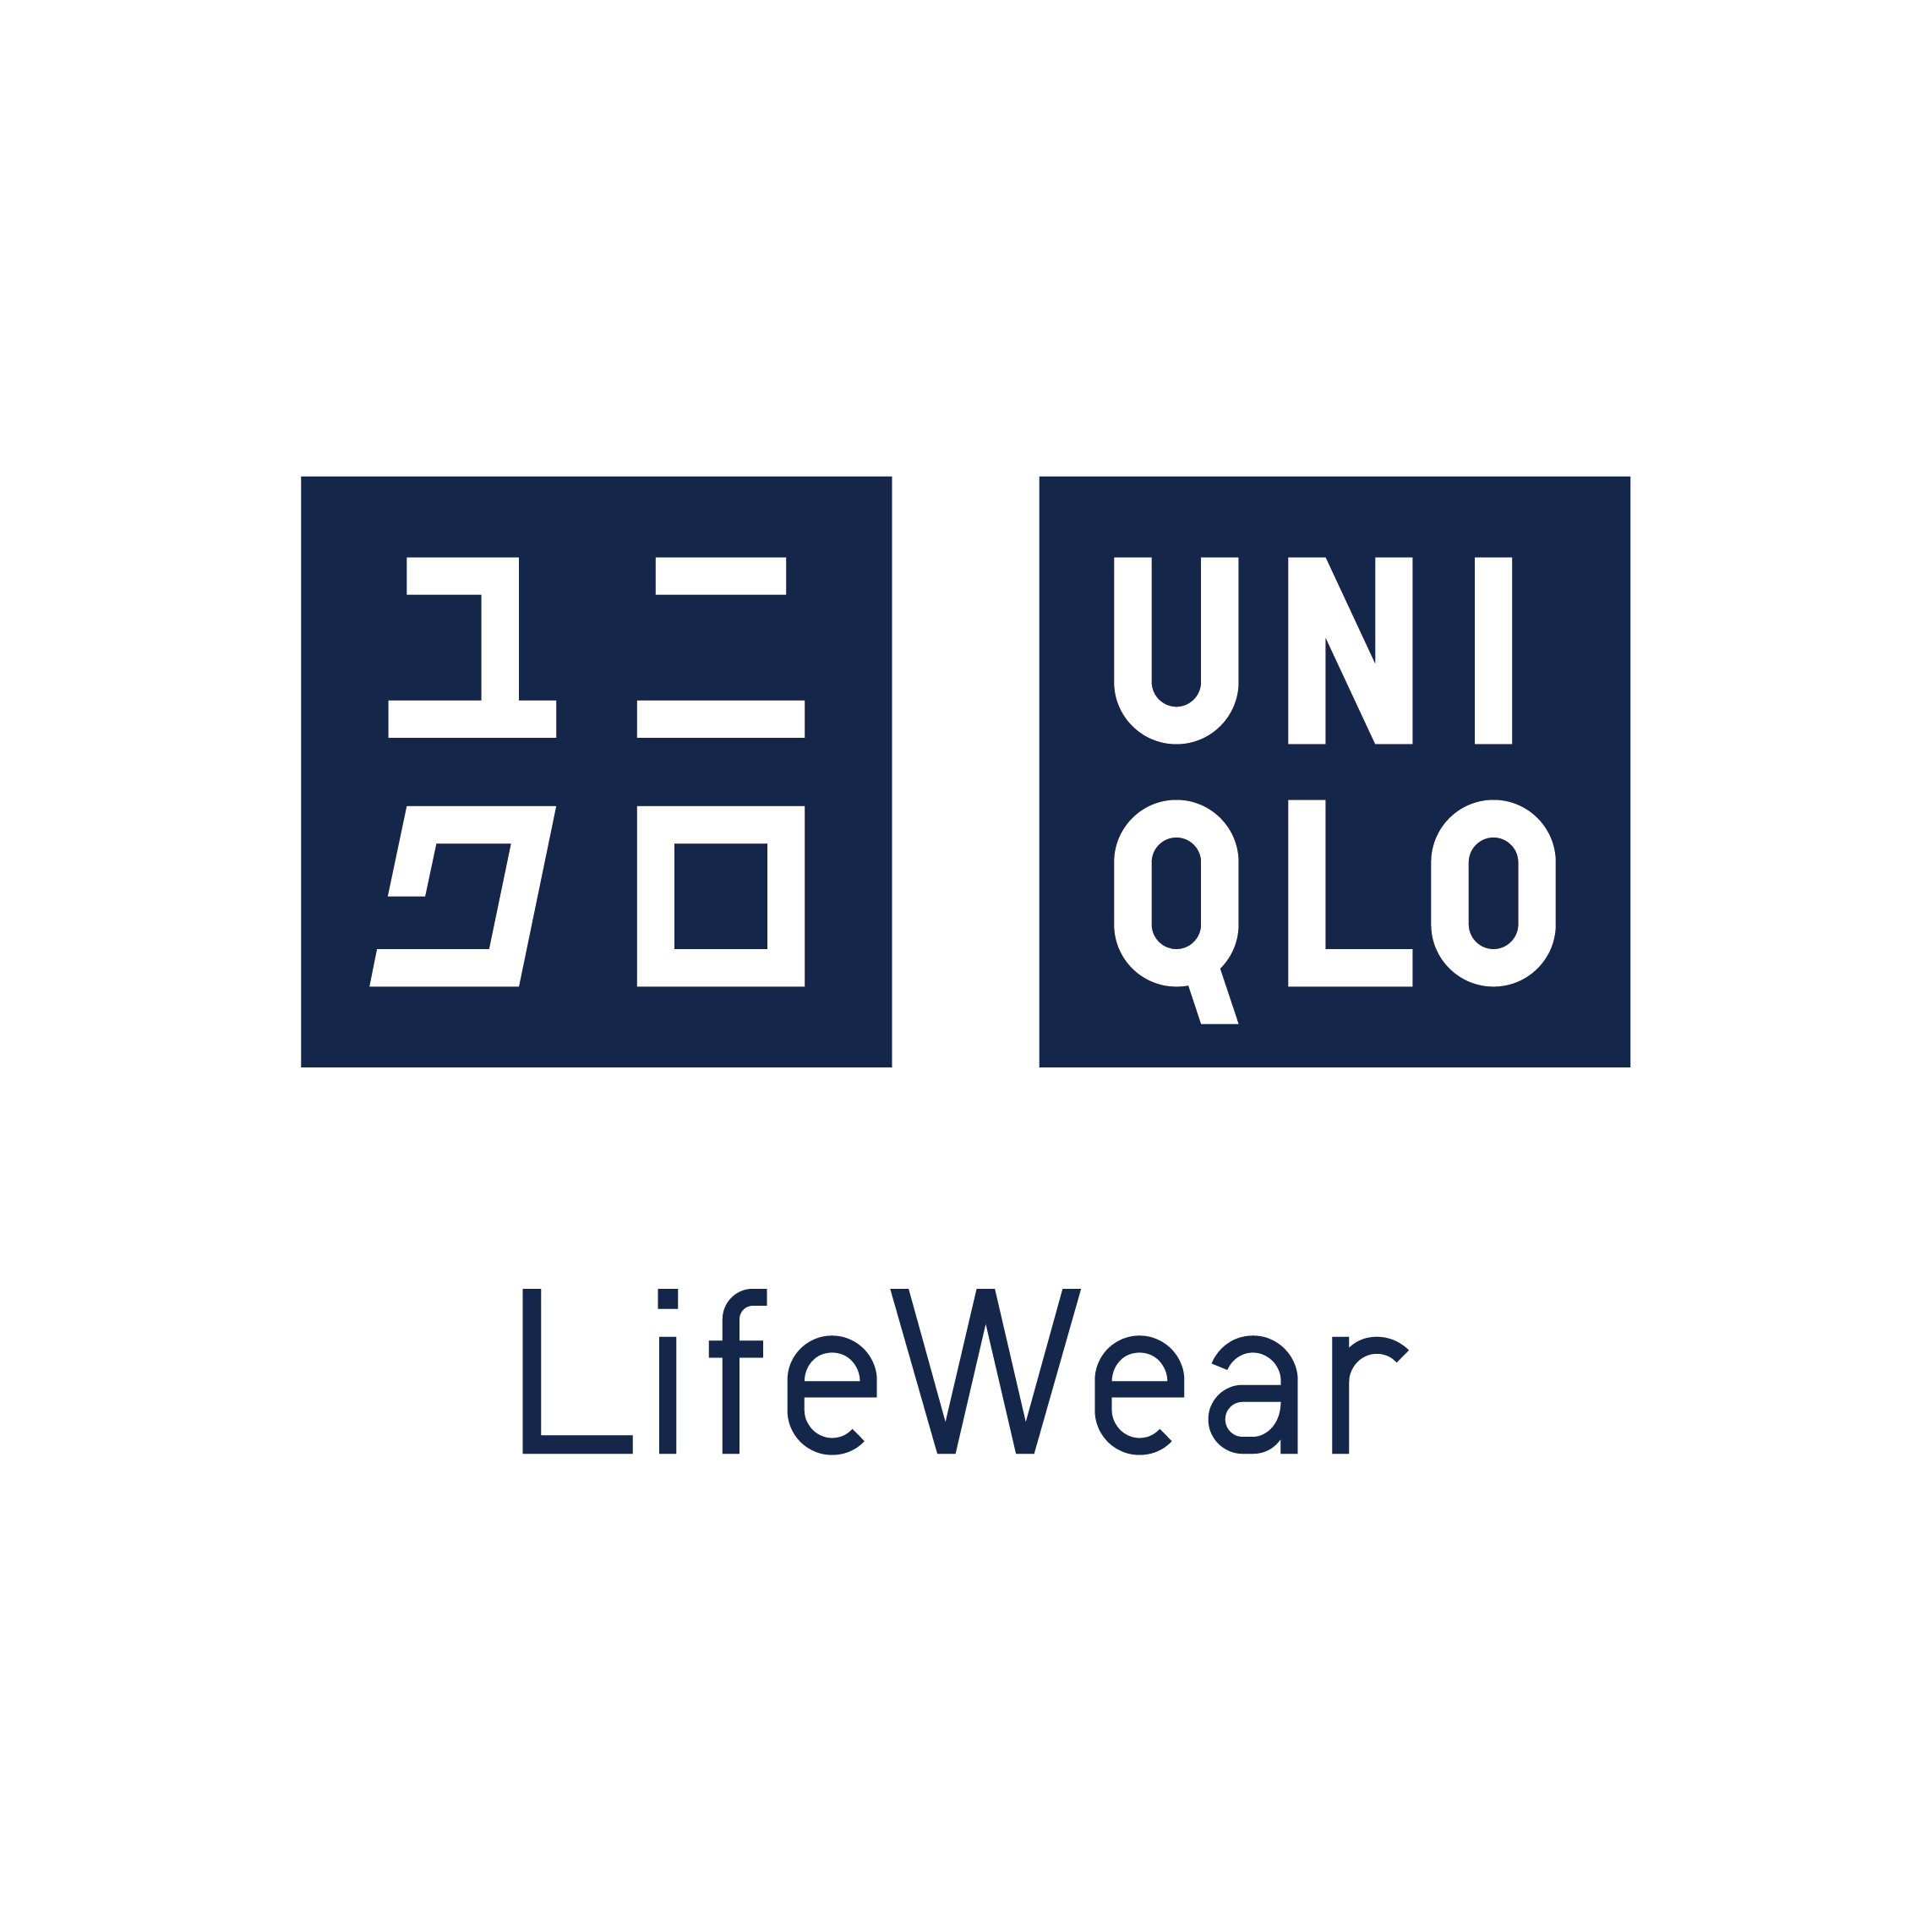 UNIQLO lifewear logo.png